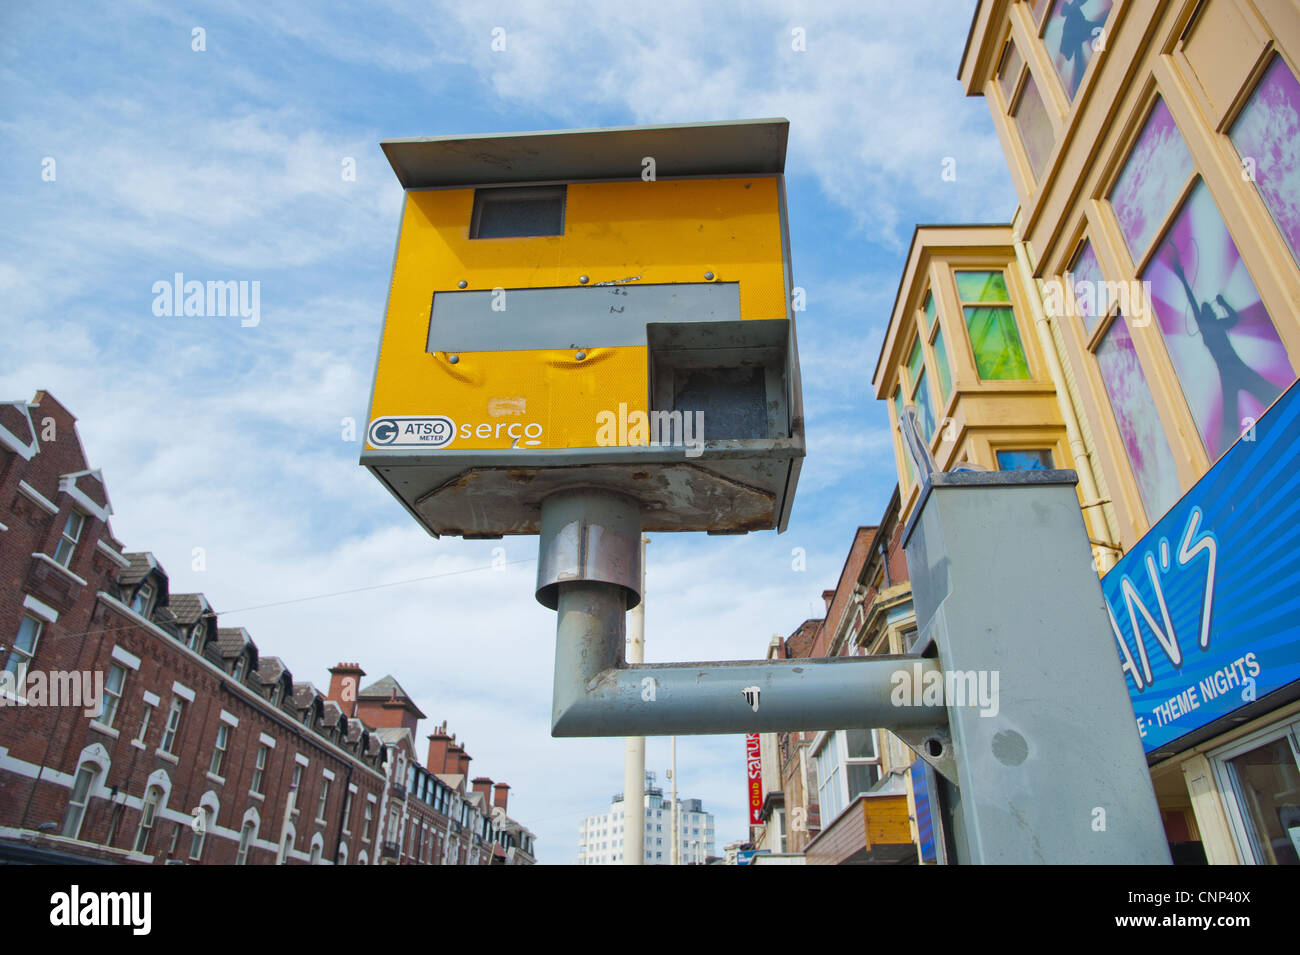 Yellow Gatso speed camera in town, Blackpool, Lancashire, England, may Stock Photo